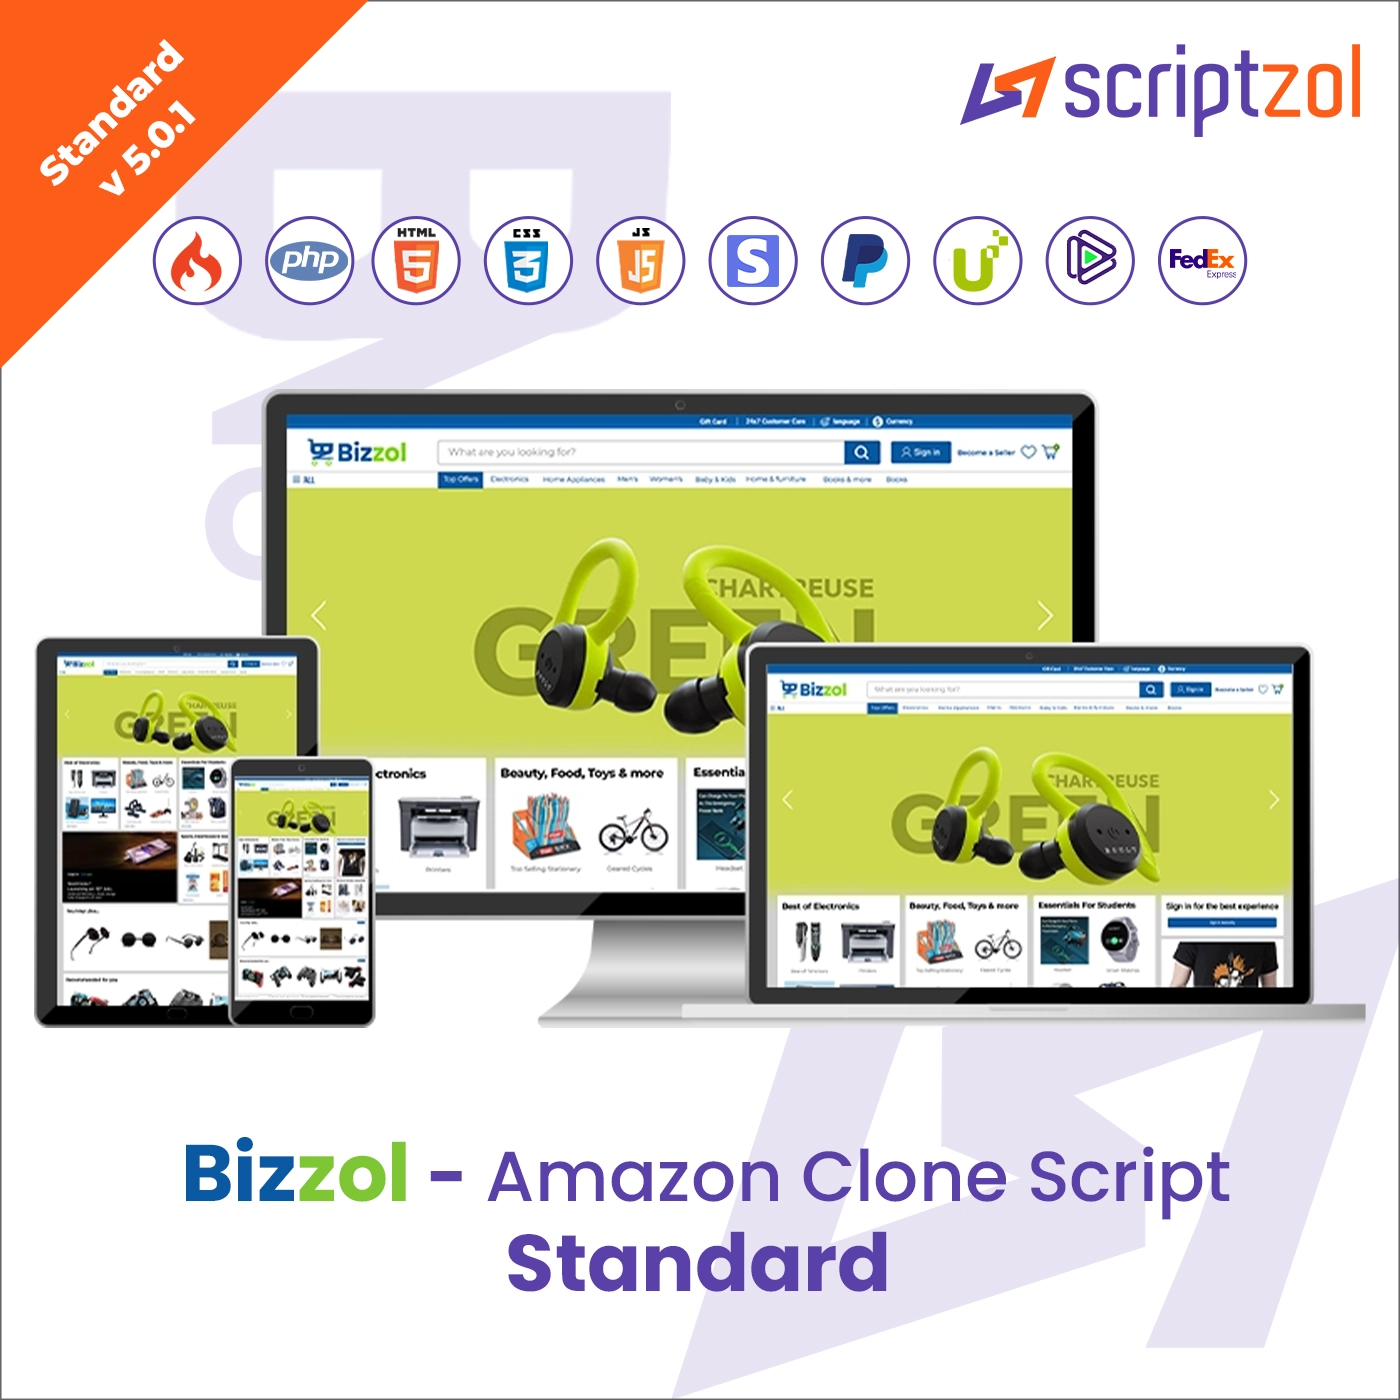 Bizzol - Amazon Clone Script Standard